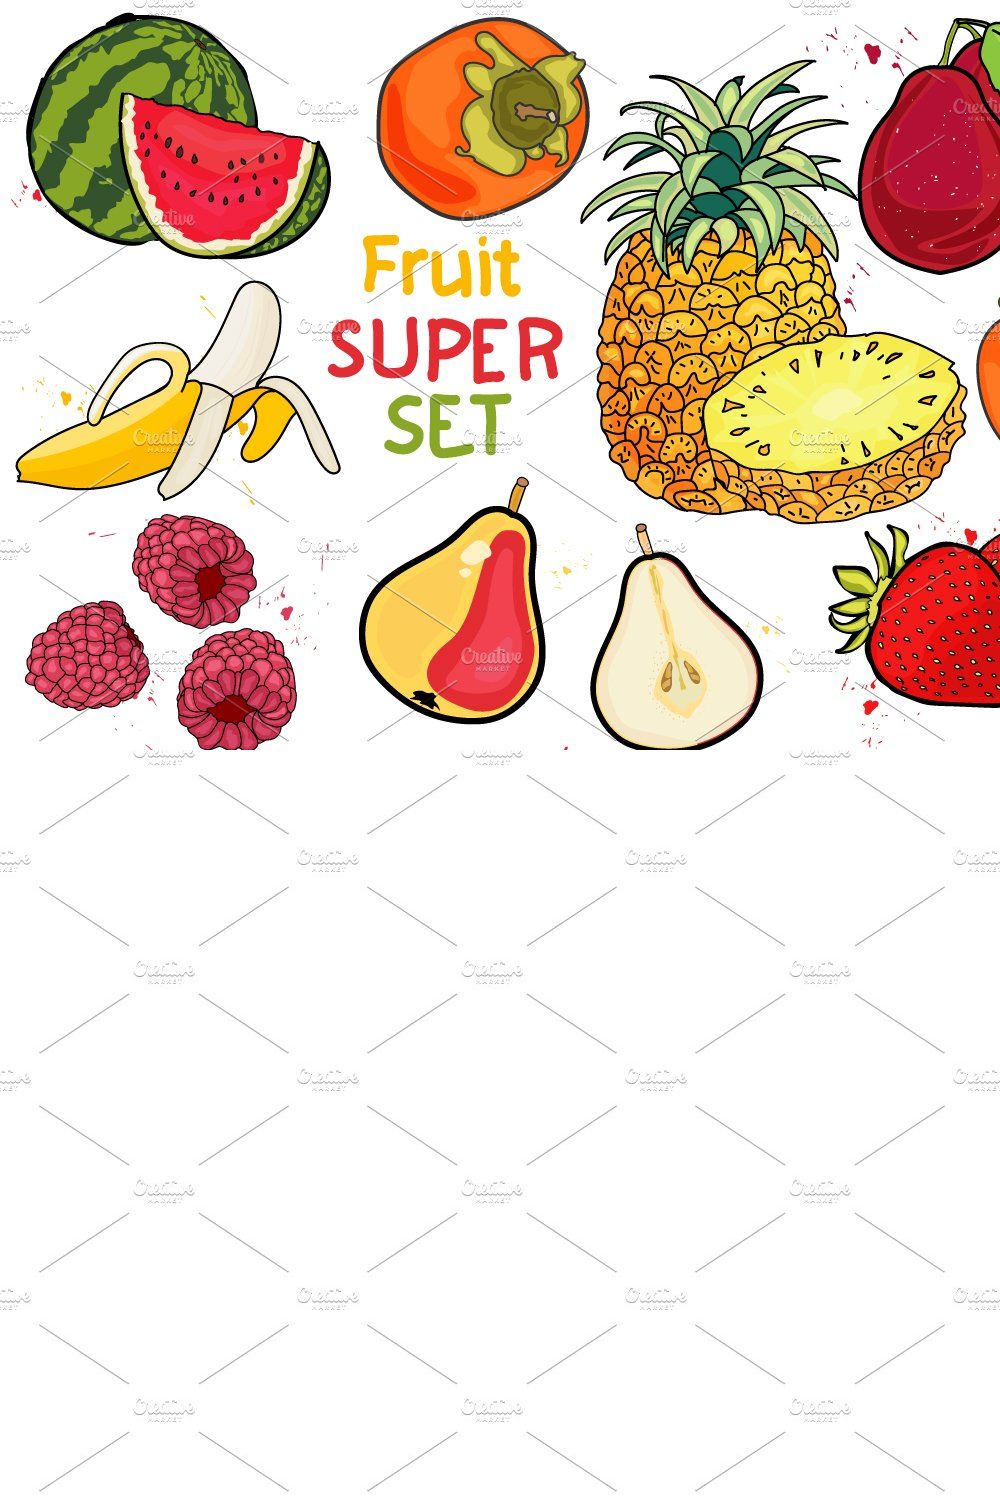 juicy fruit- BIG set pinterest preview image.